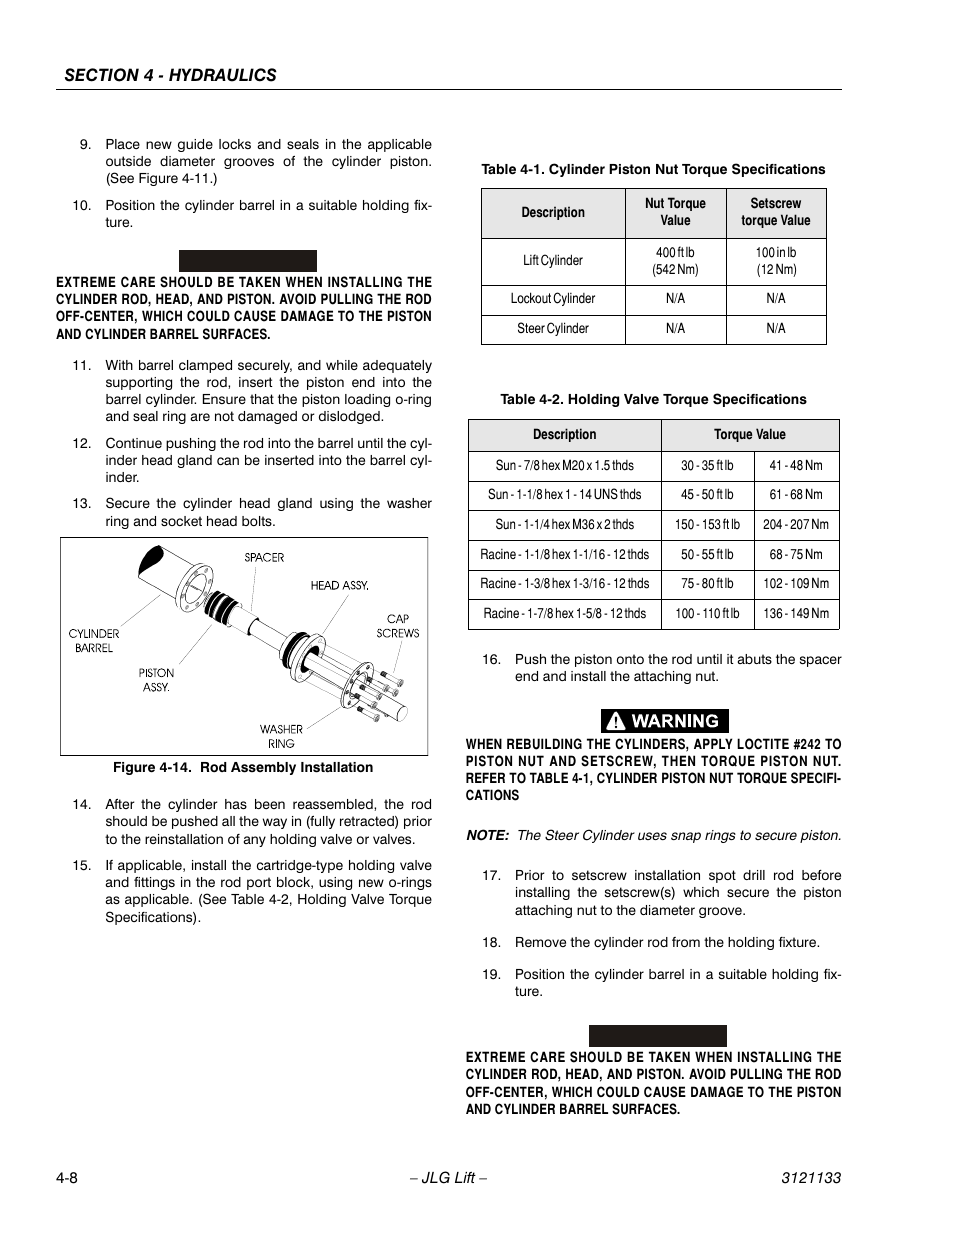 Hydraulic Cylinder Piston Nut Torque Chart